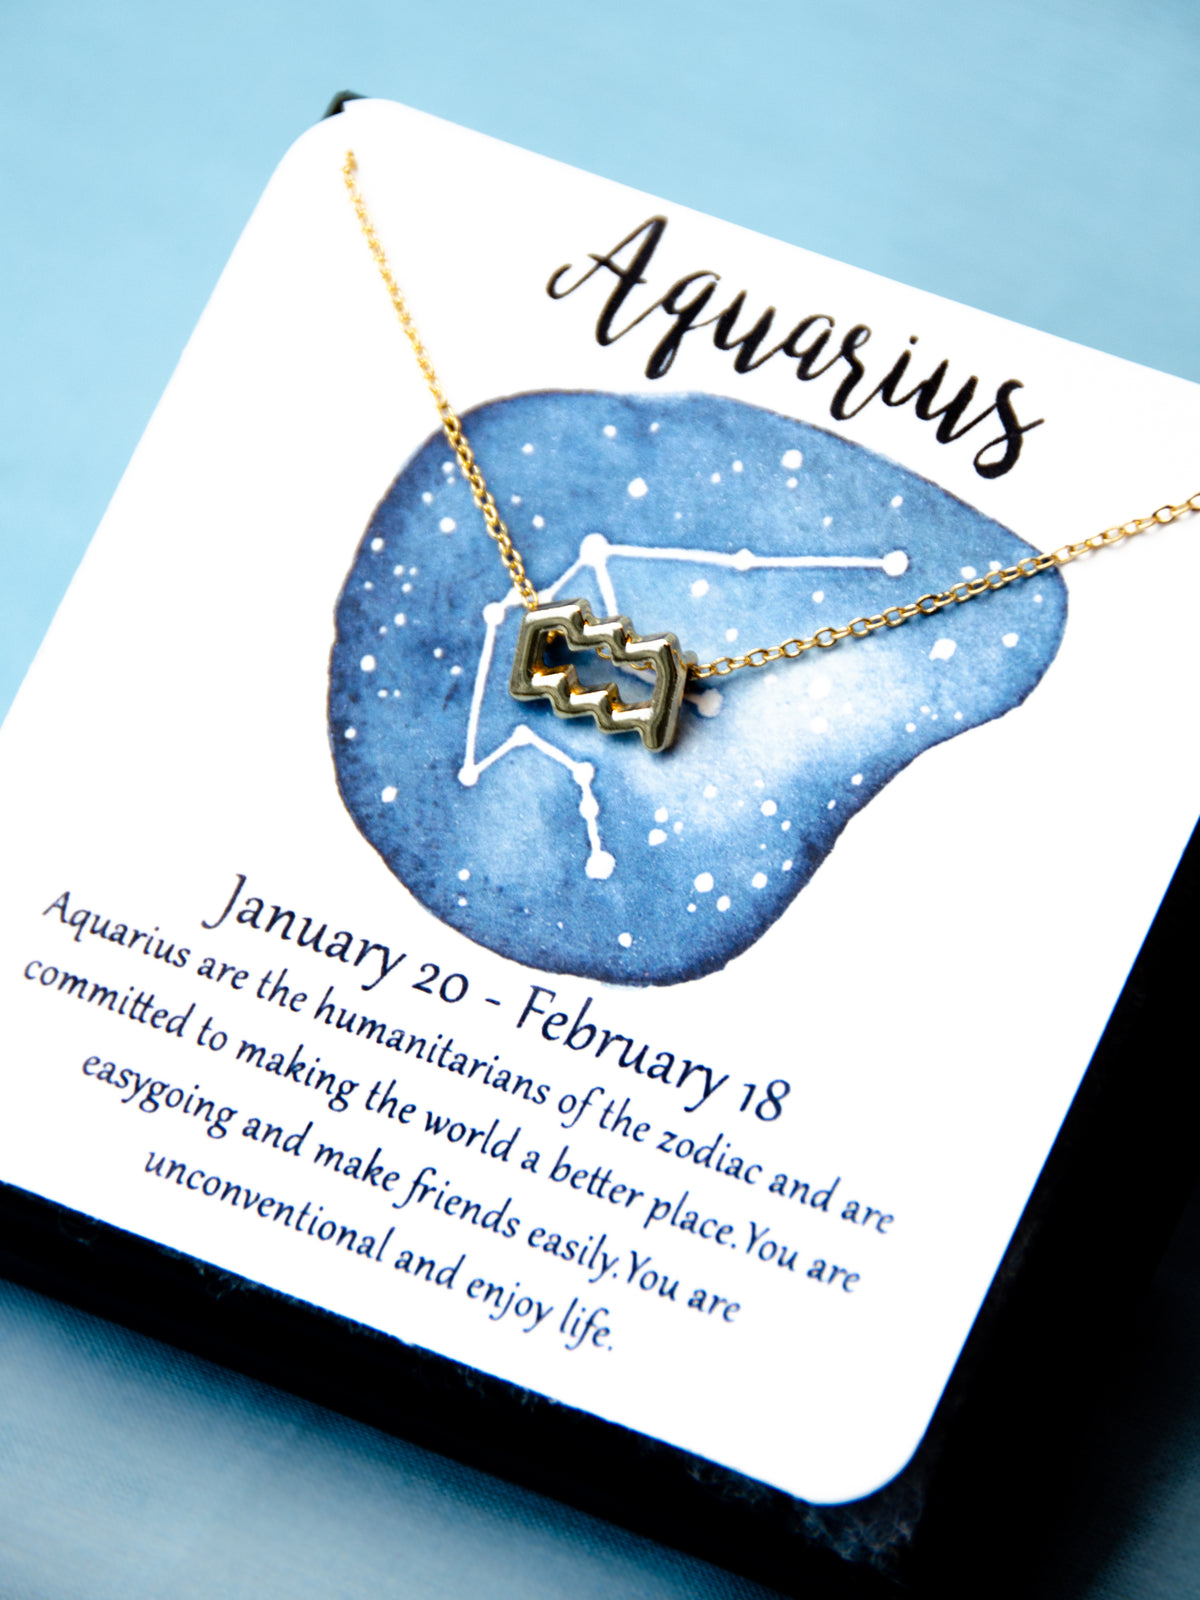 zodiac Aquarius astrological necklace on horoscope card